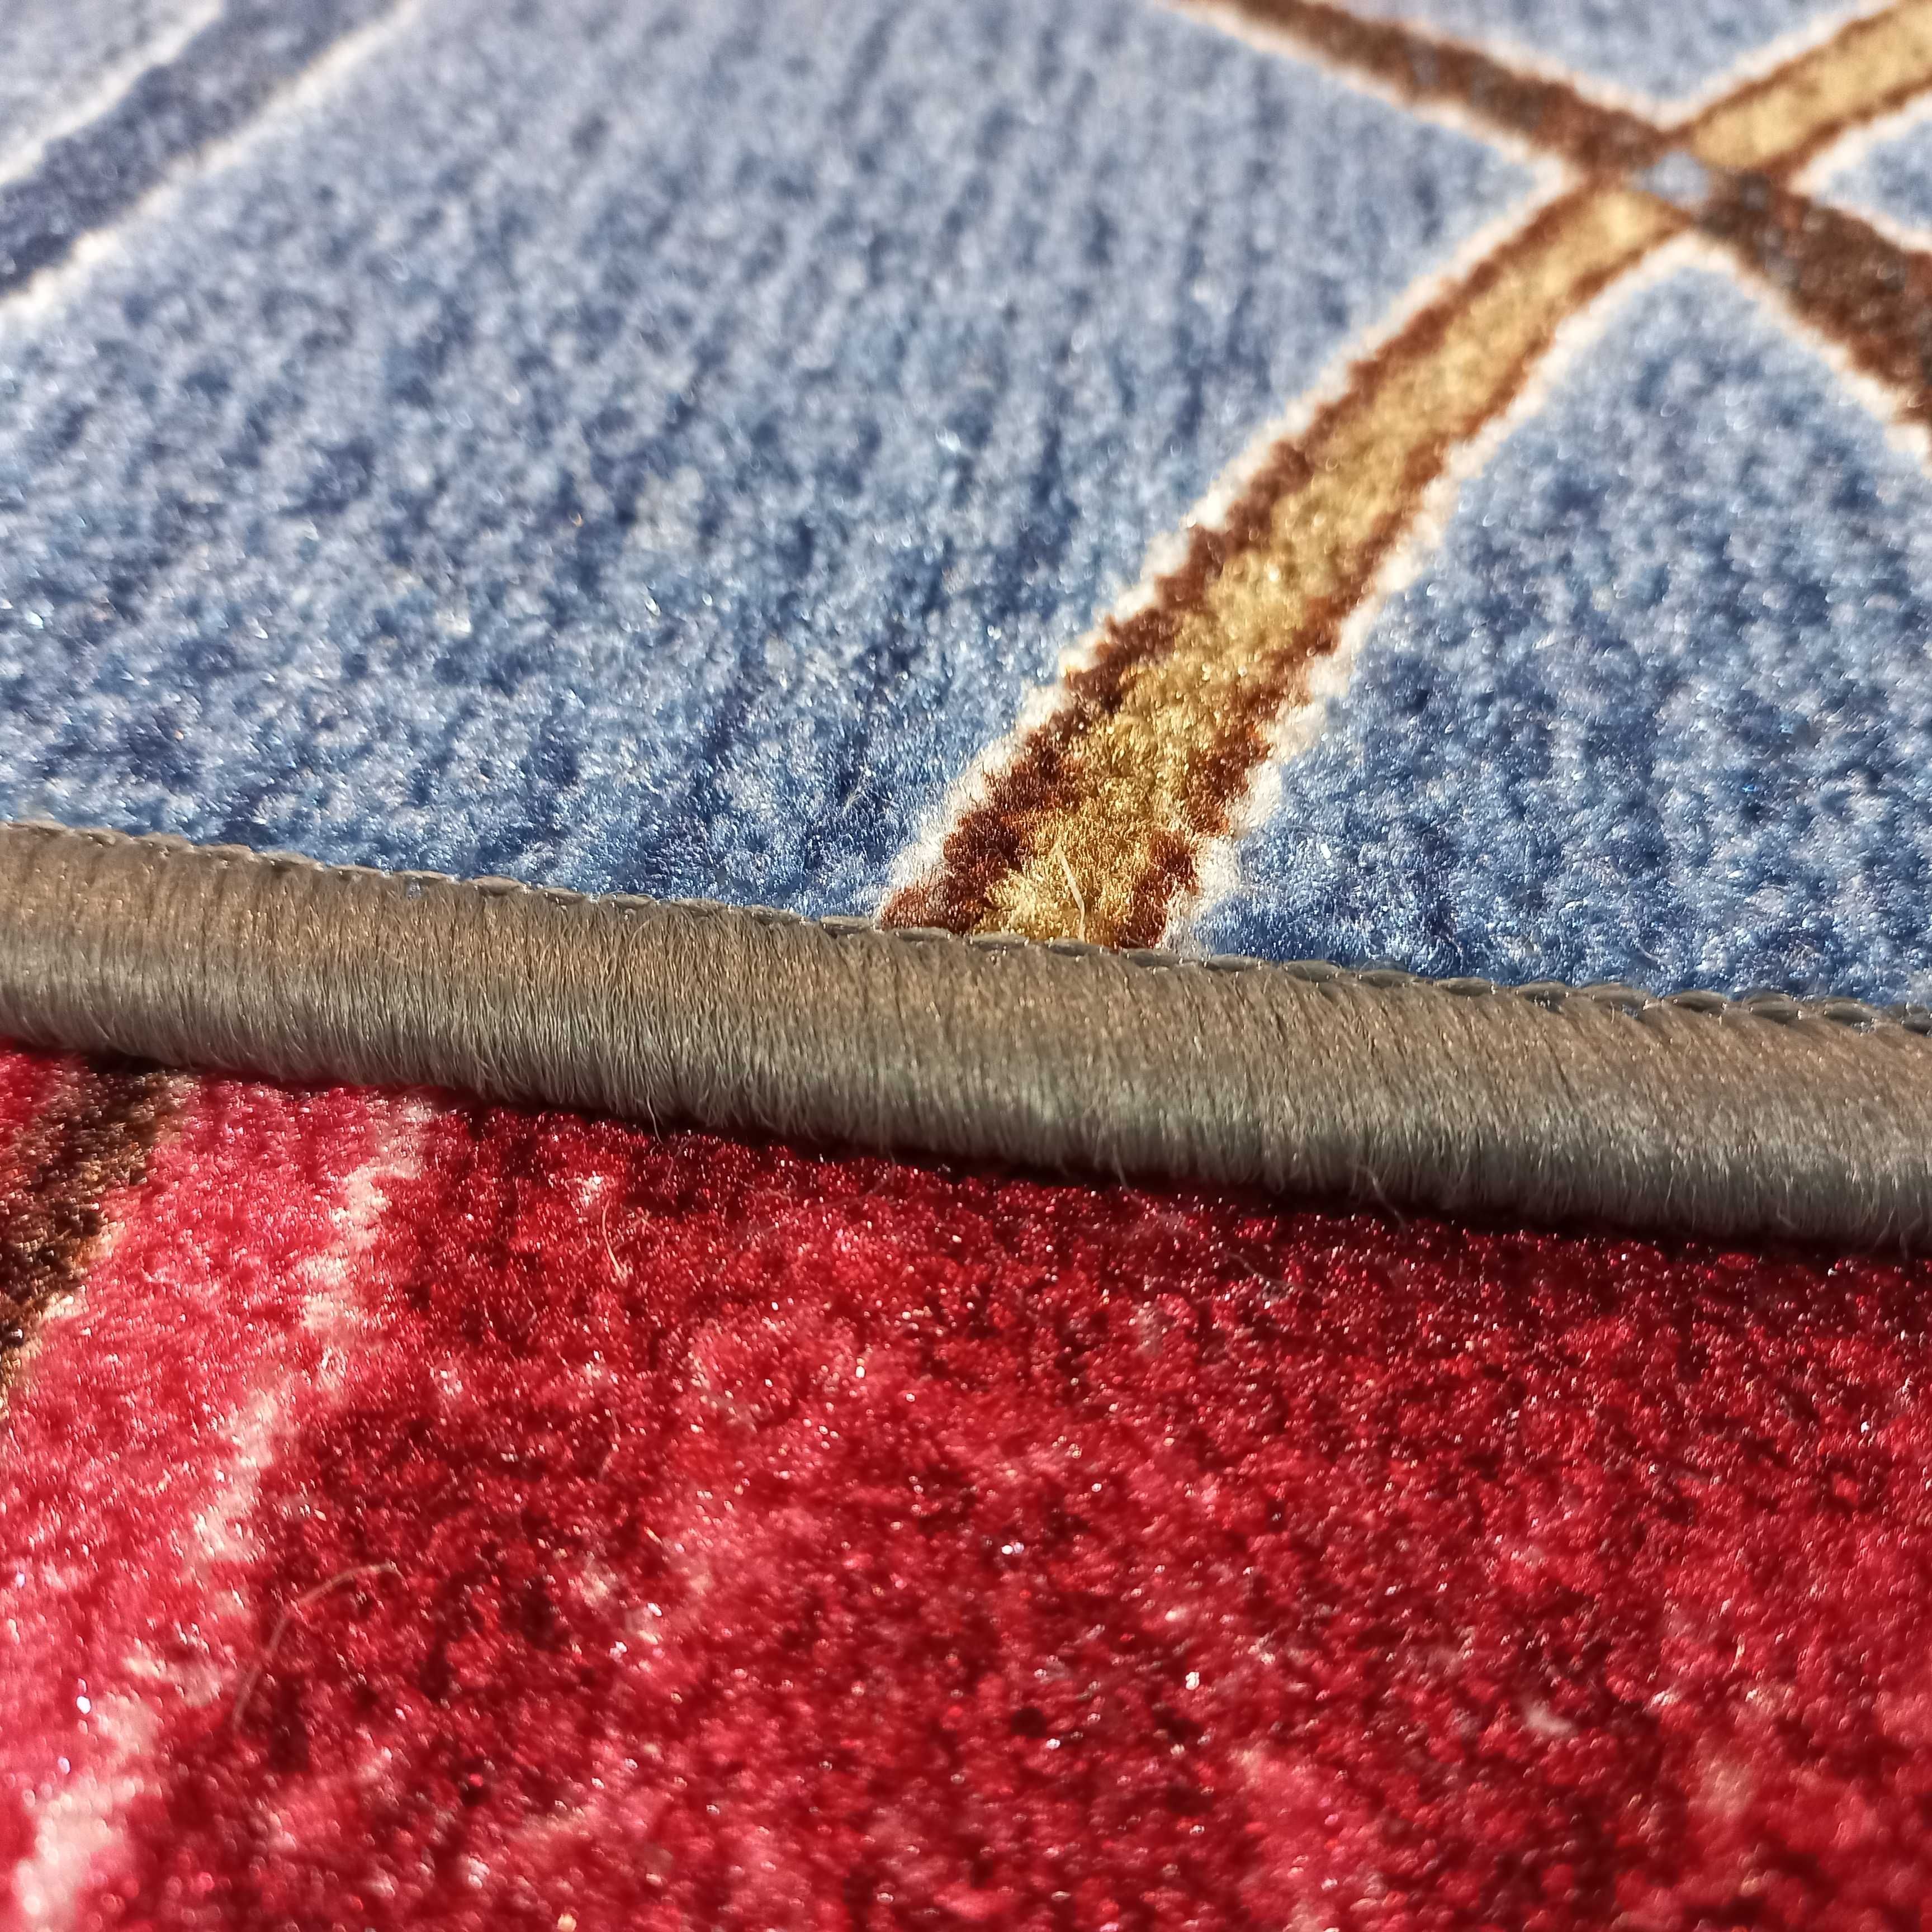 Розпродаж складу коврик килим ковер килимок Асортимент